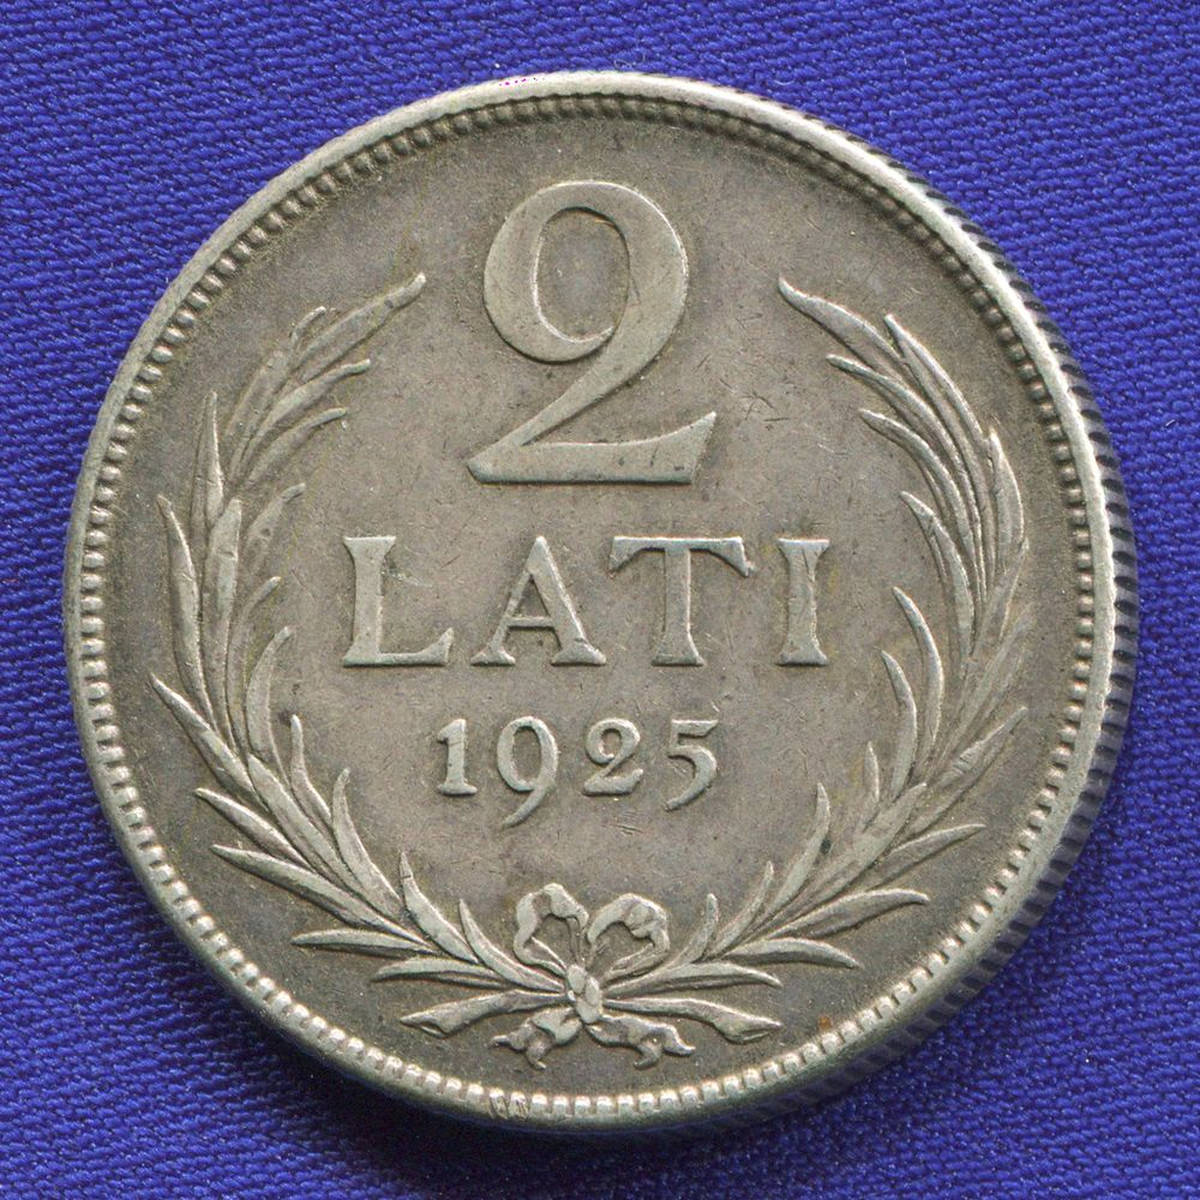 Латвия 2 лата 1925 XF